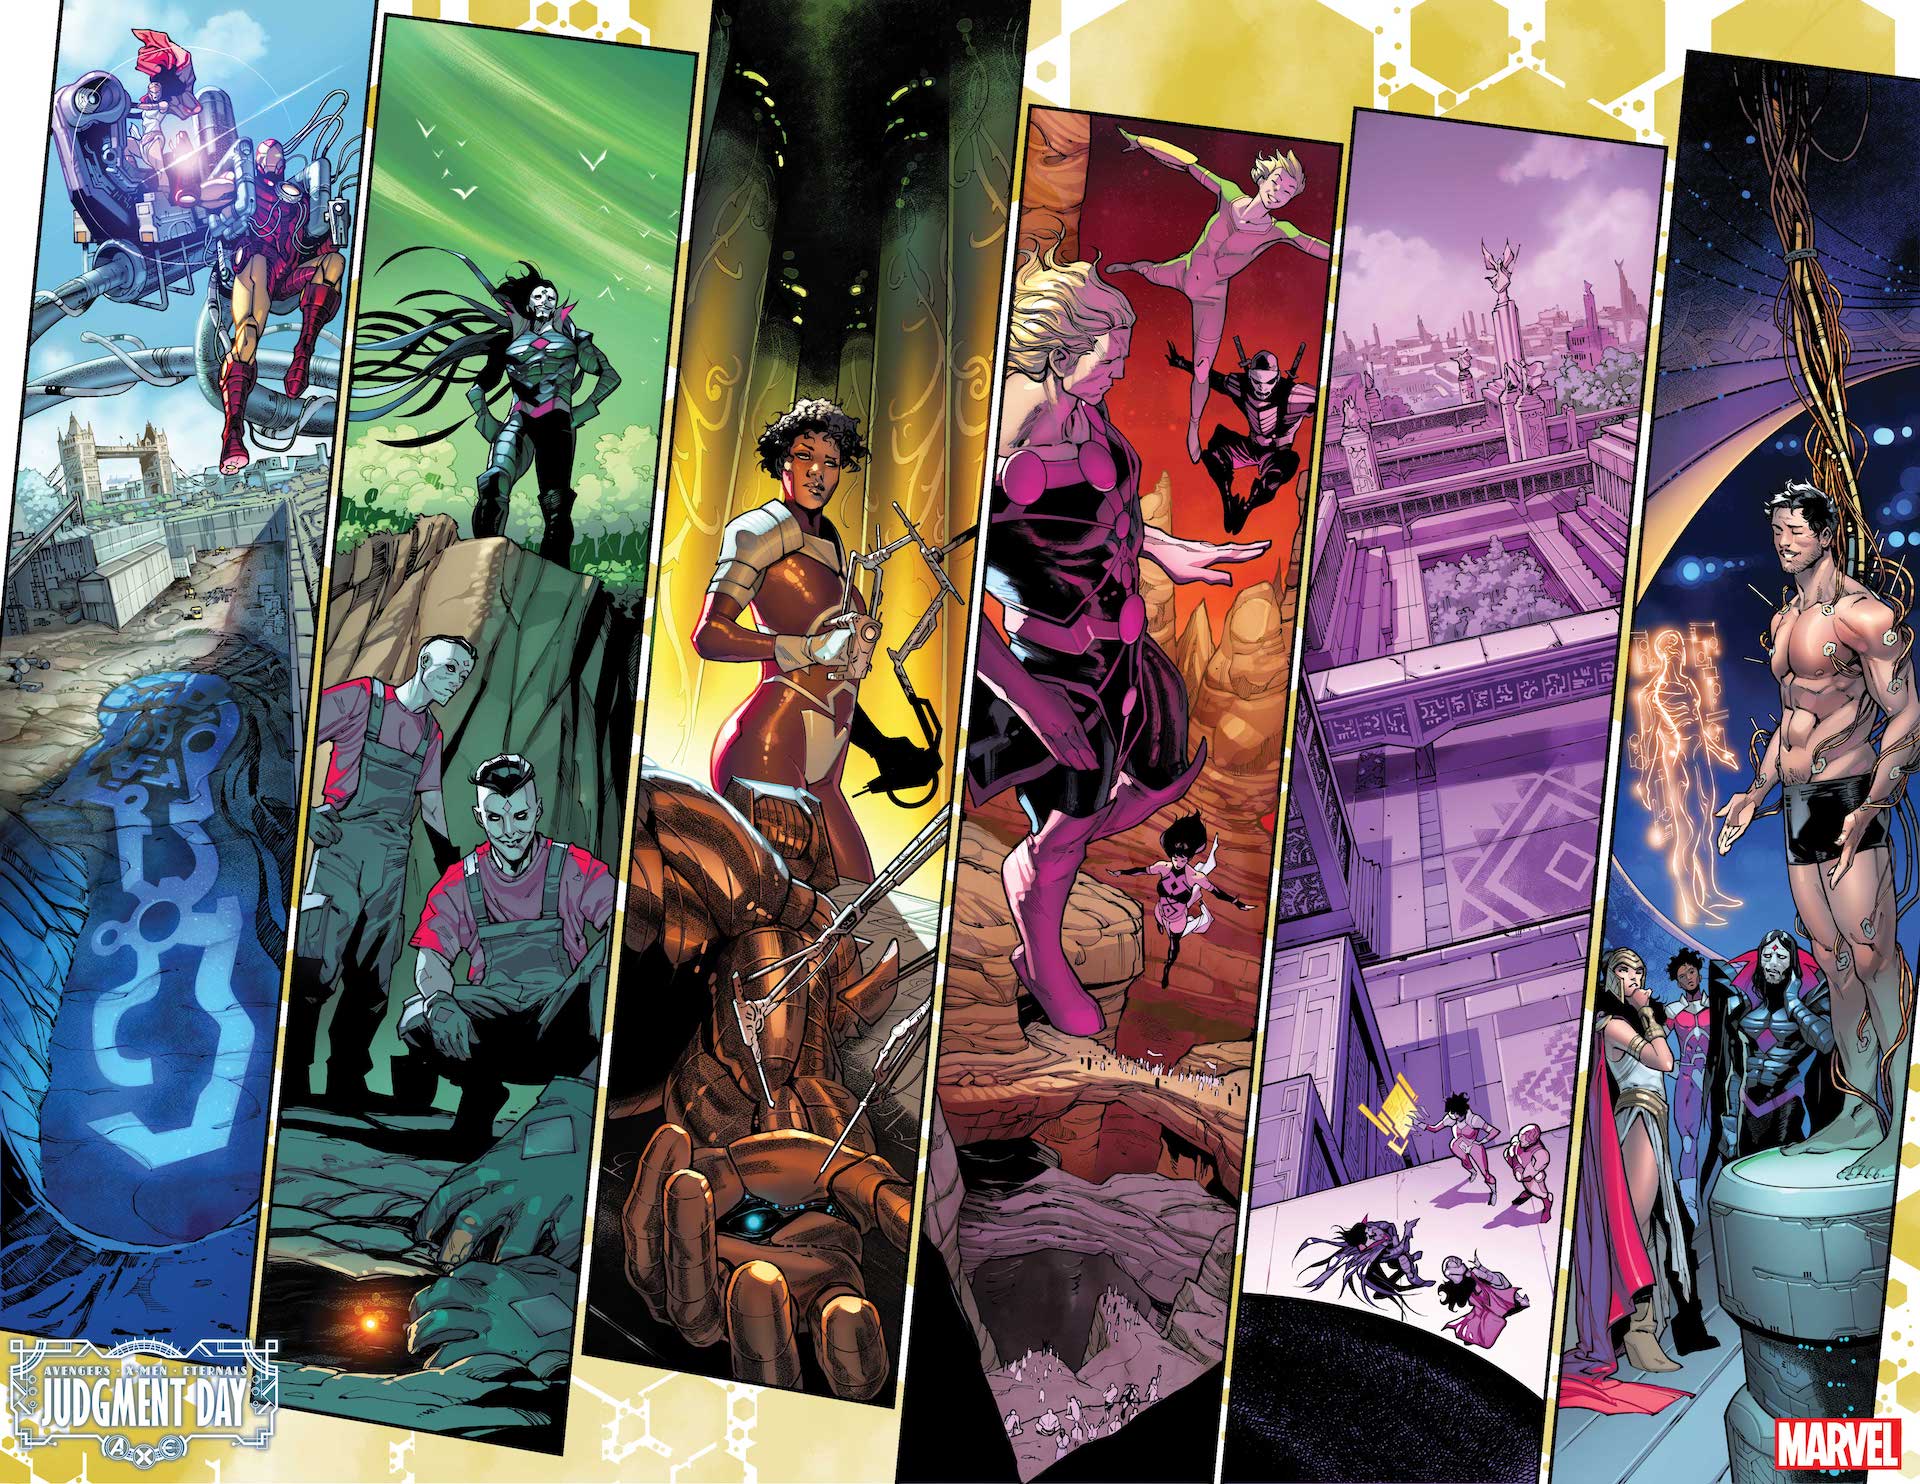 SDCC '22: Marvel's 'Judgment Day' panel recap